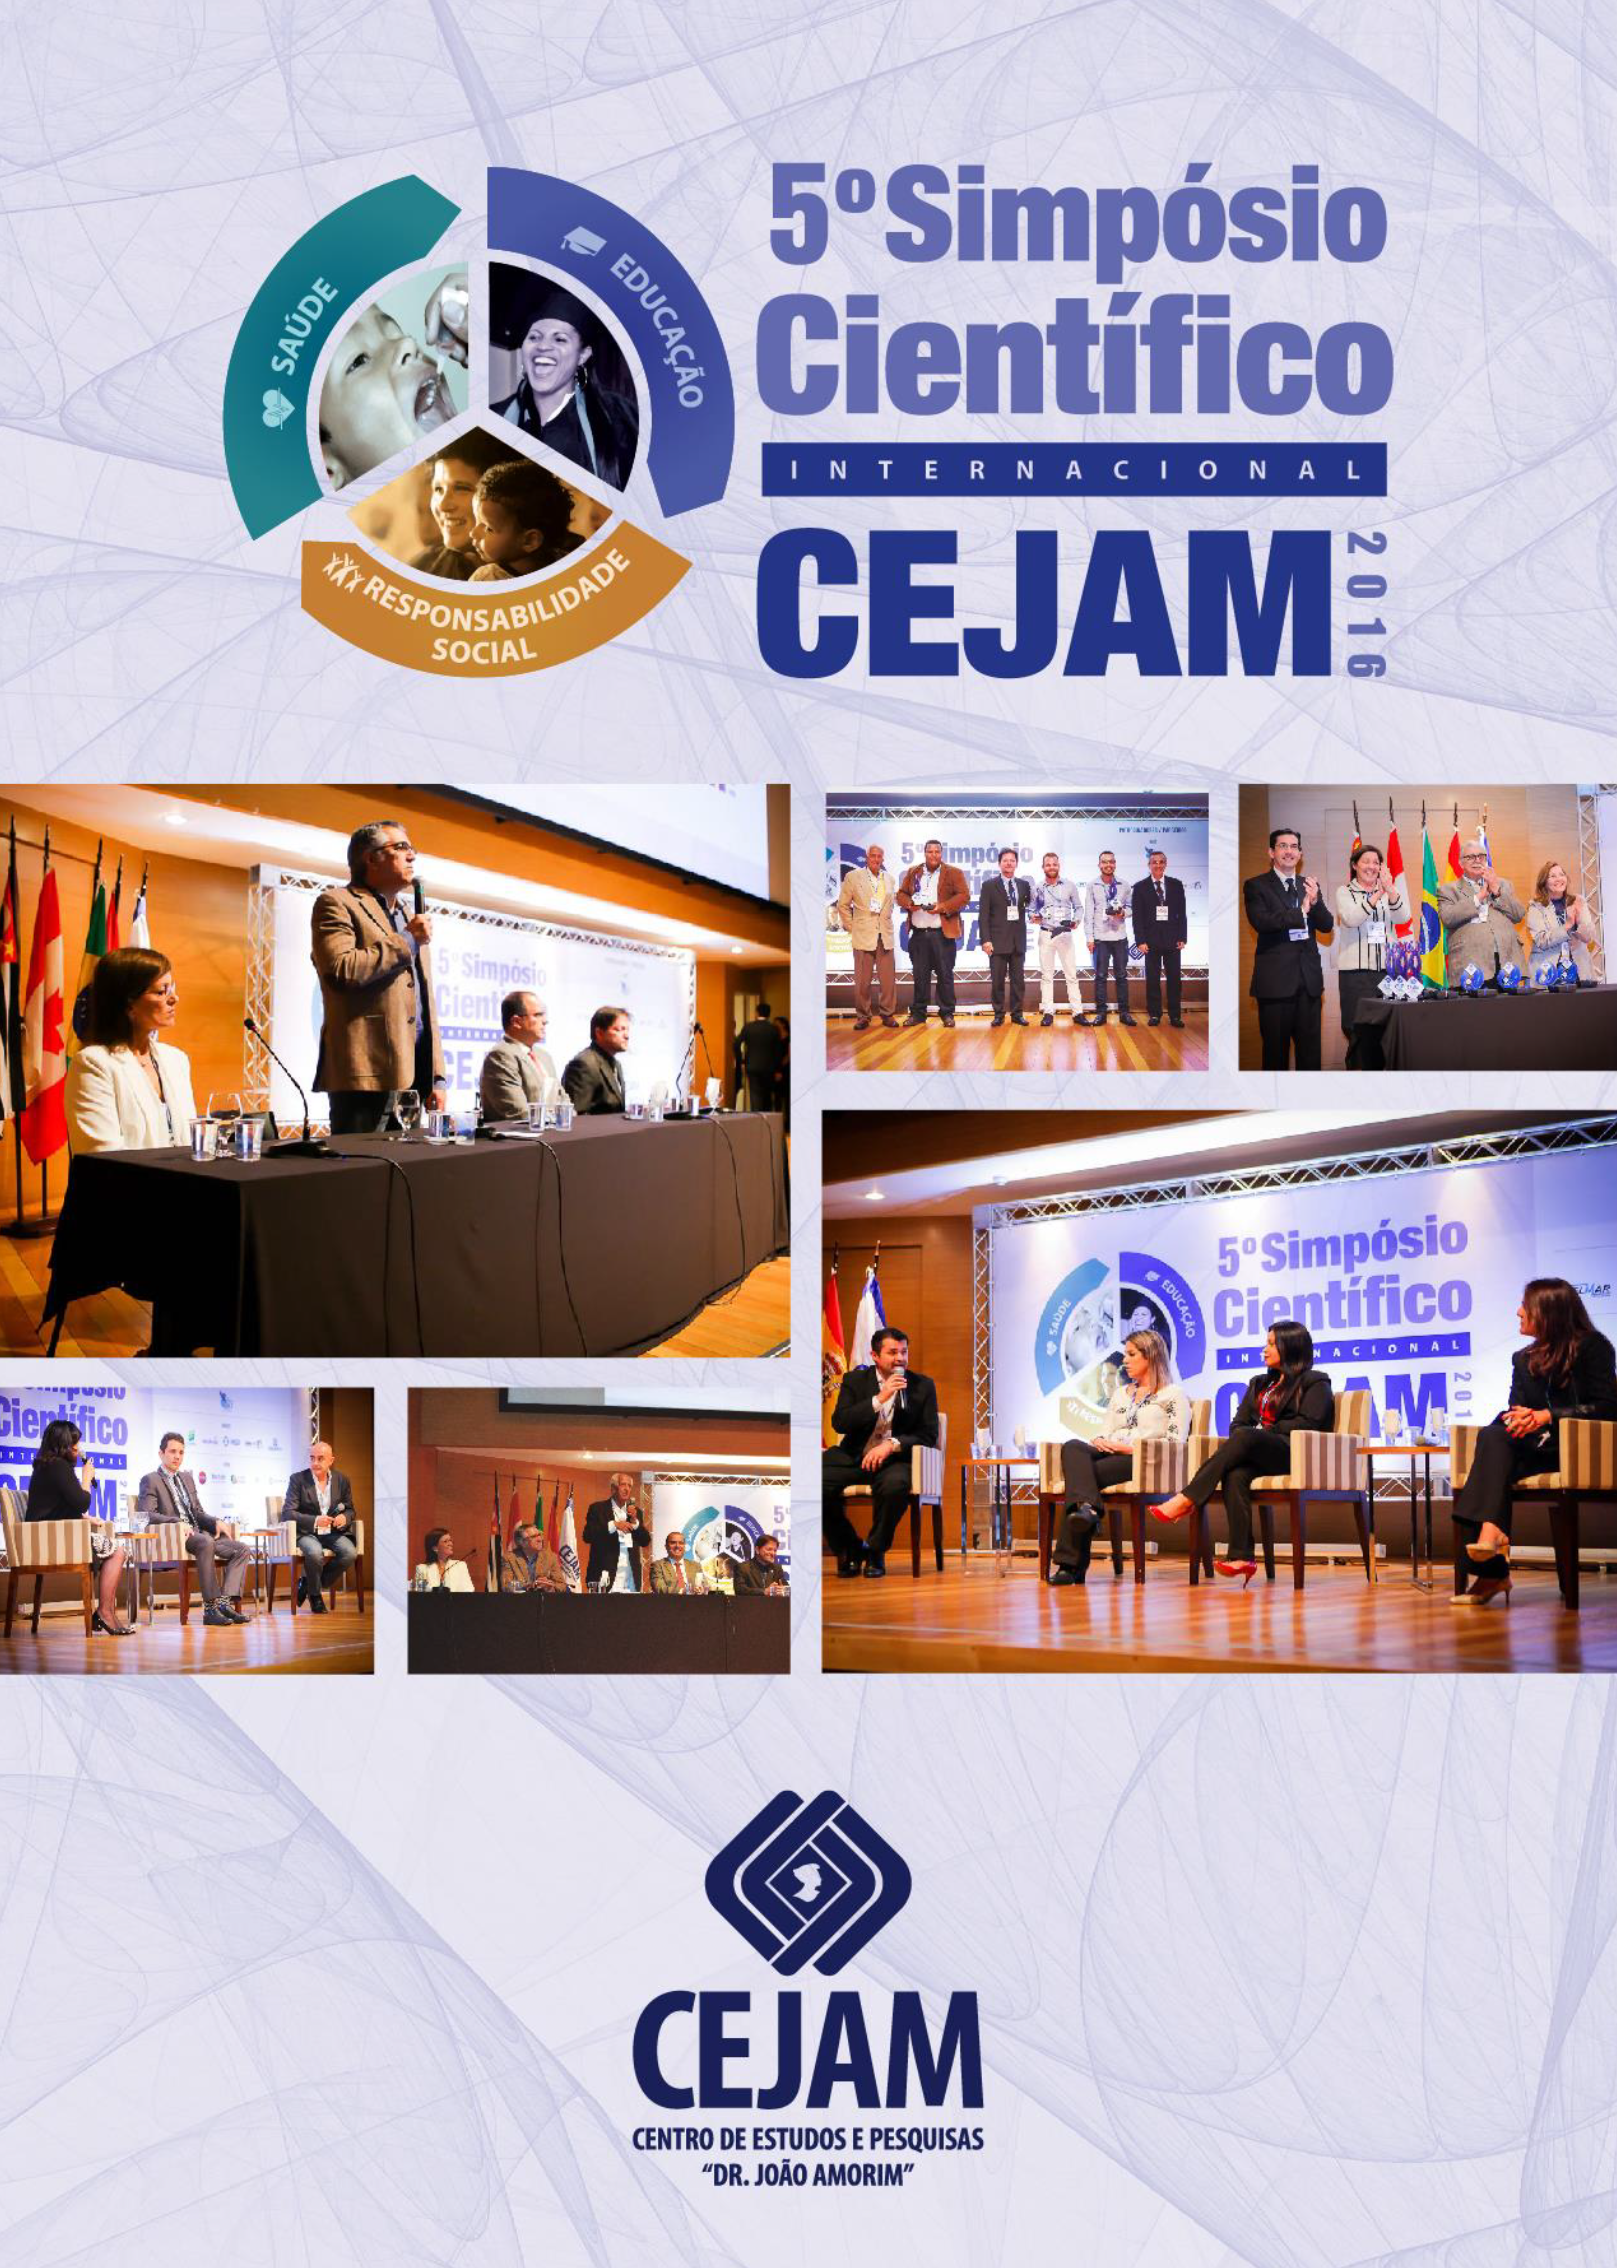                     Visualizar v. 5 (2016): 5º Simpósio Científico Internacional CEJAM
                